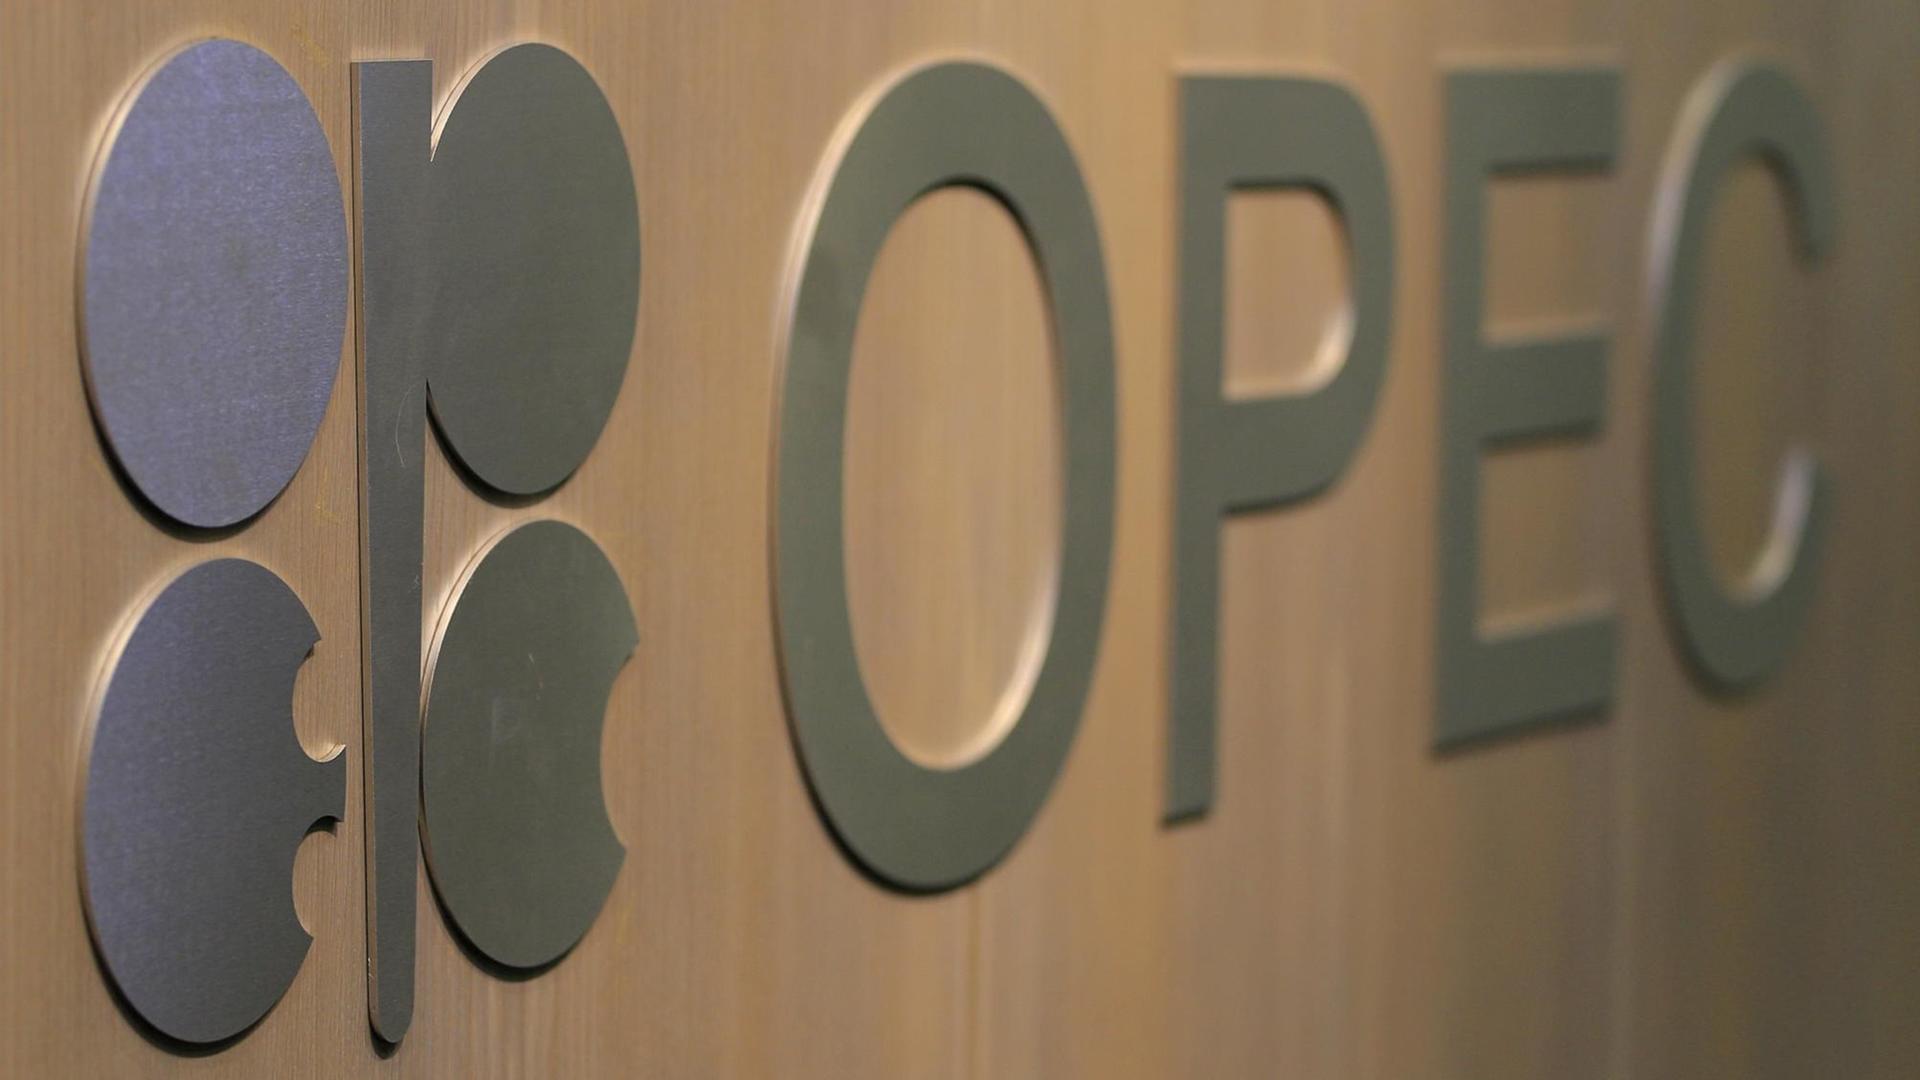 Das Logo der OPEC (Organization of the Petroleum Exporting Countries), zu sehen am Abend der 164. Versammlung der OPEC in Wien am 3. Dezember 2013.